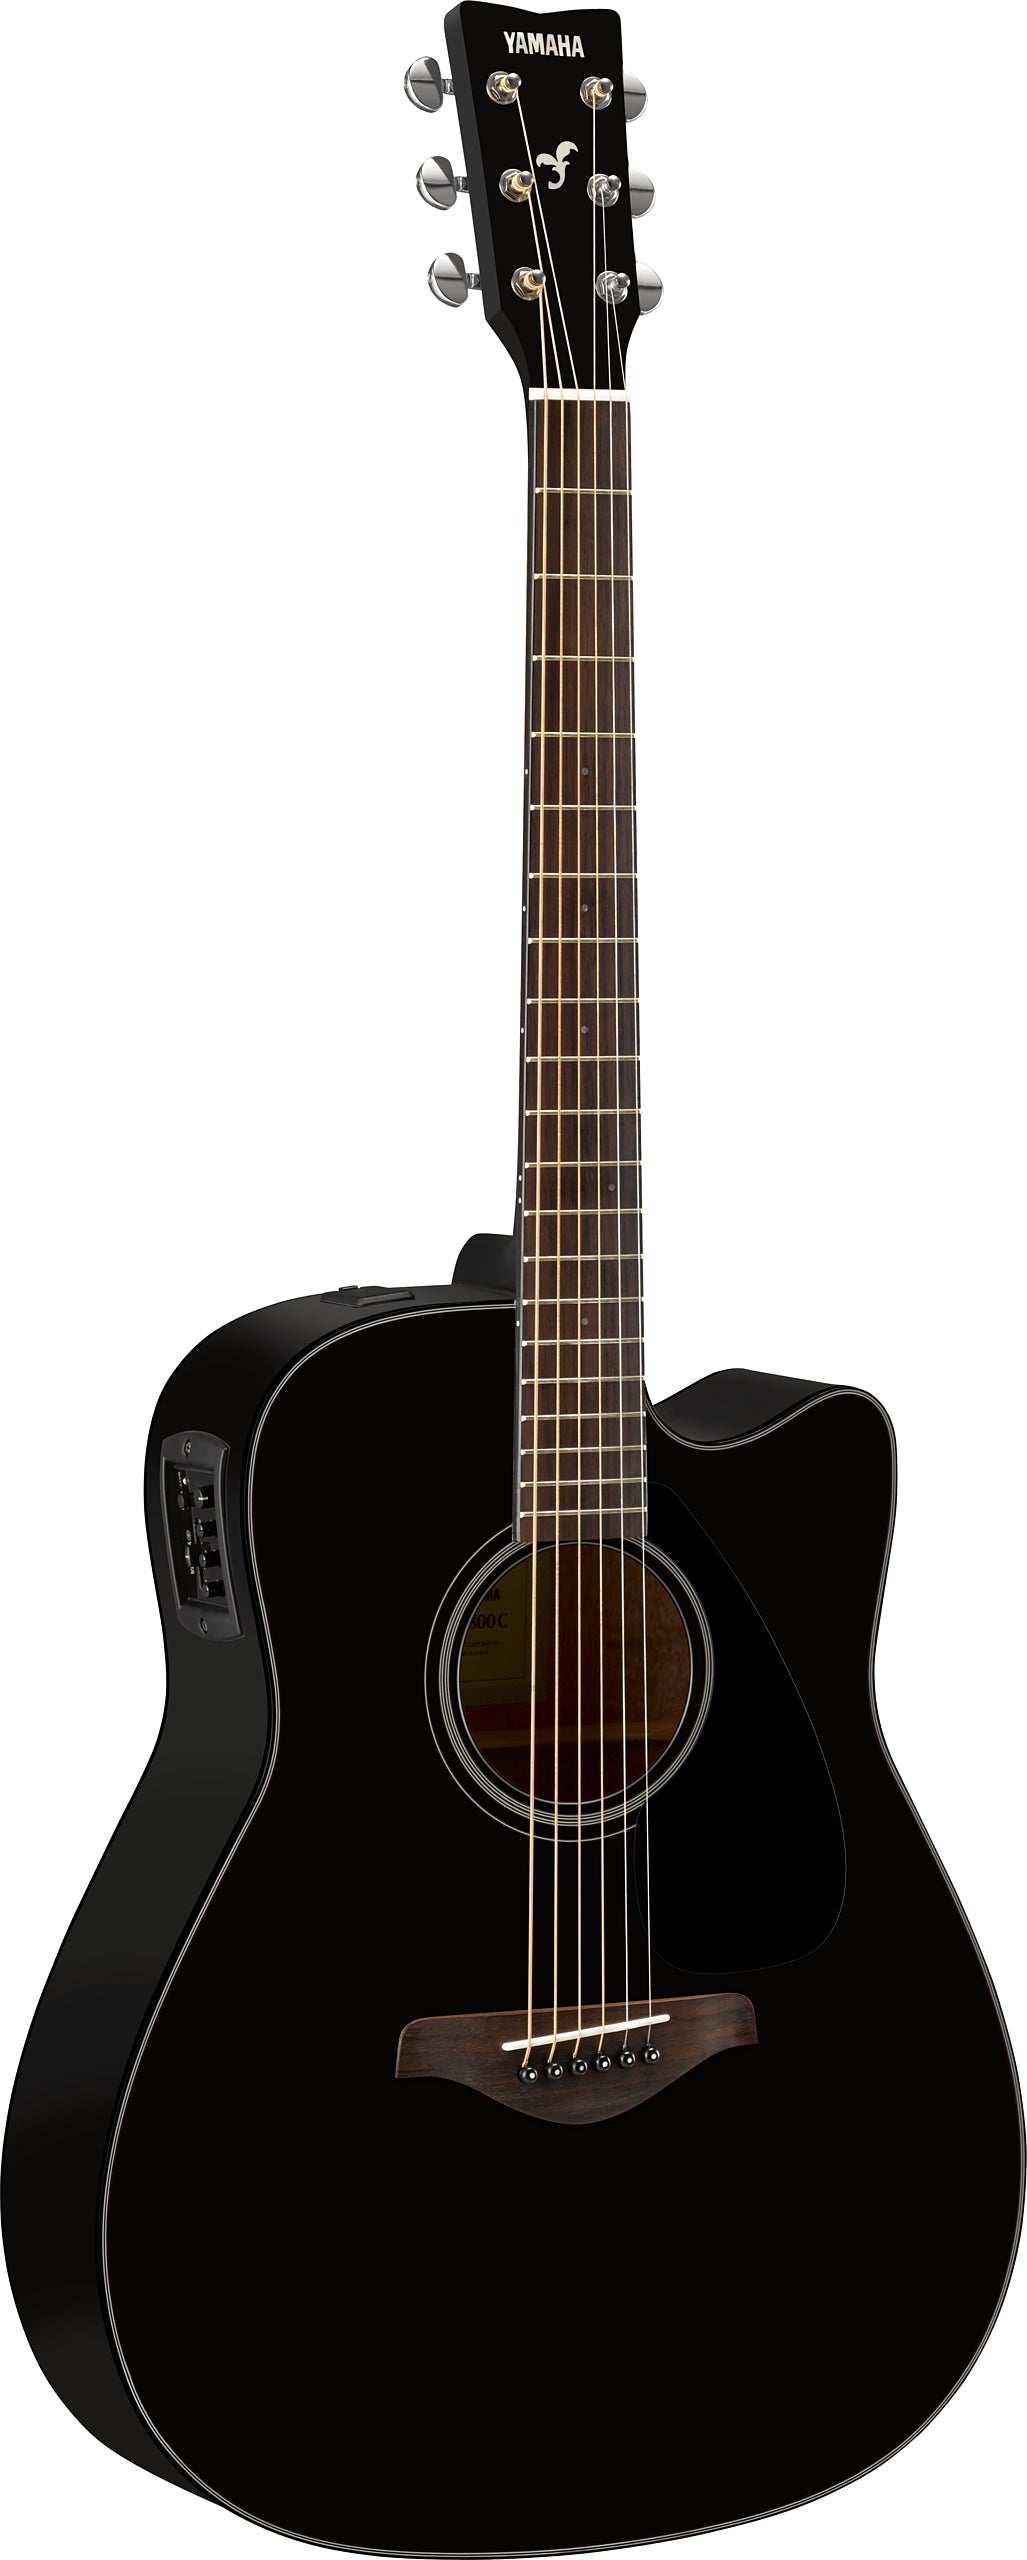 Yamaha FGX800C BL Acoustic Guitar - Black